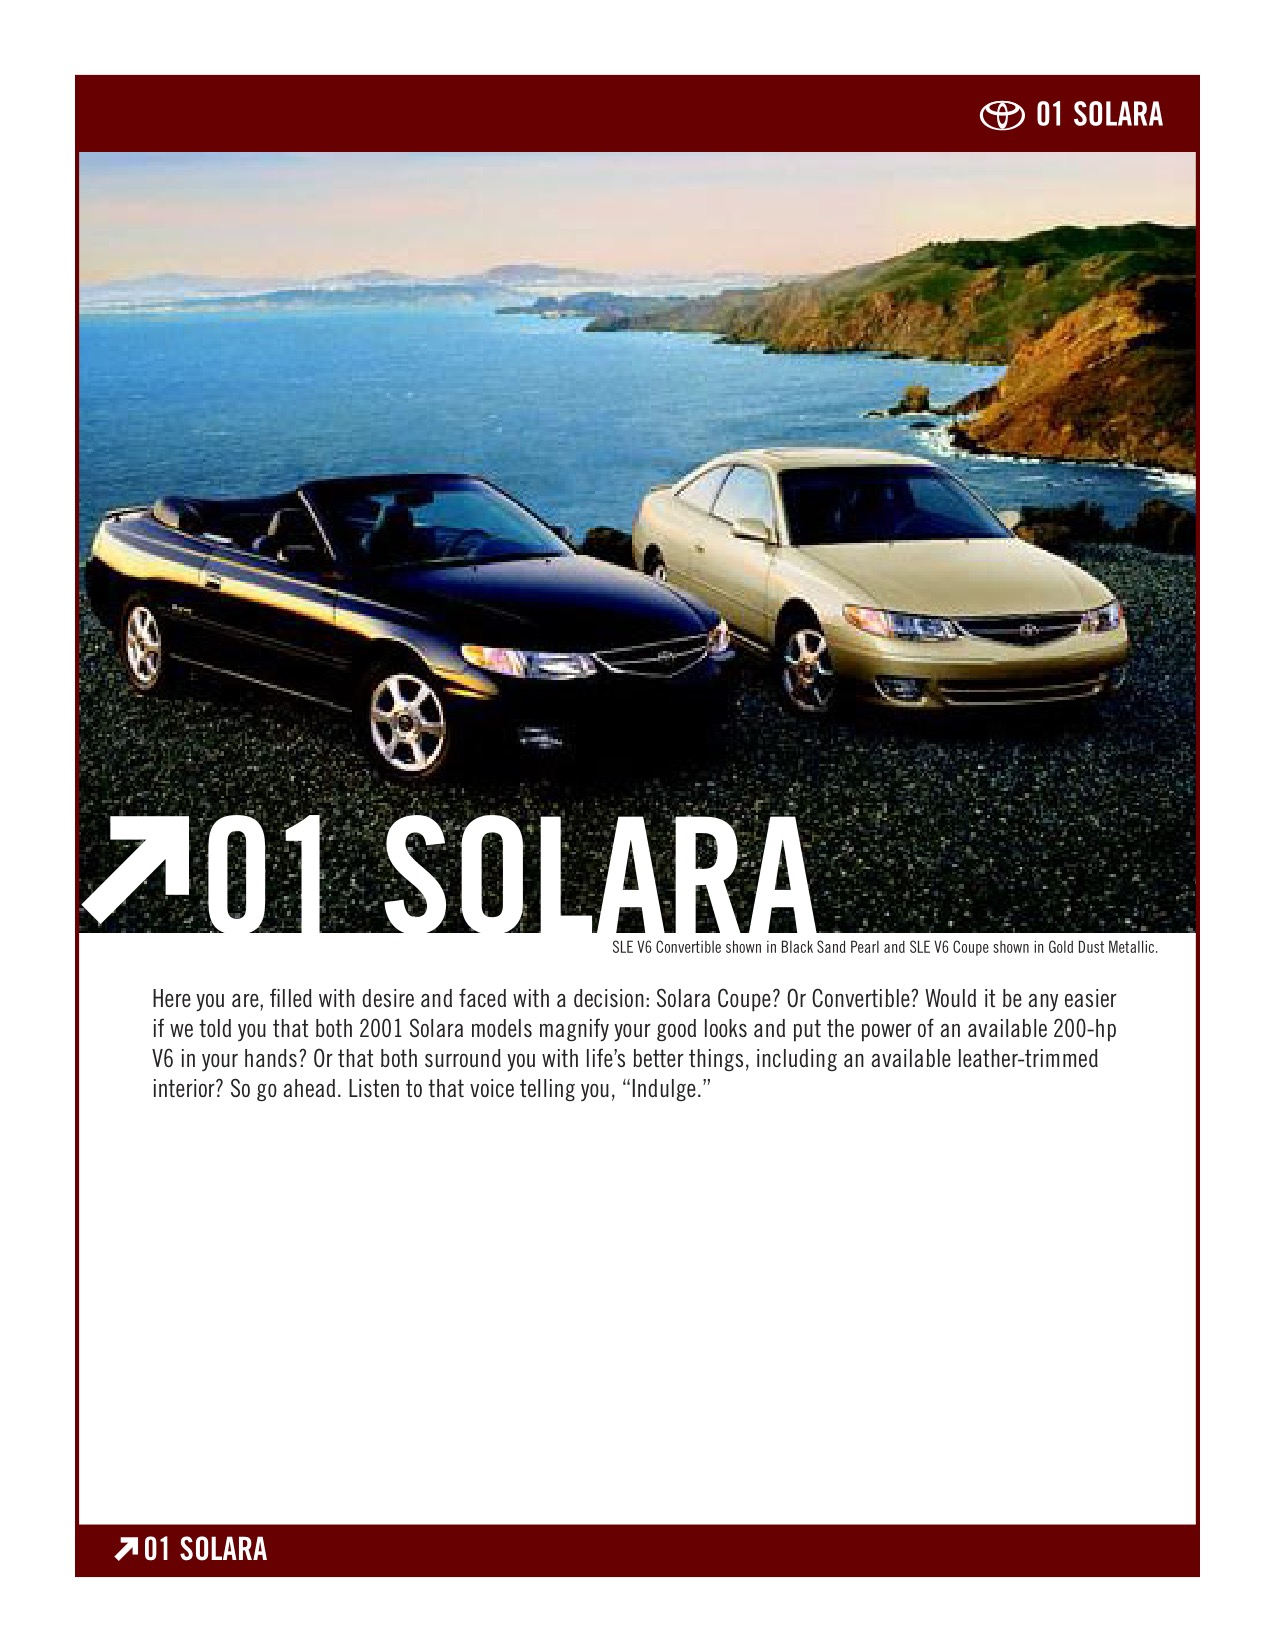 2001 Toyota Solara Brochure Page 3